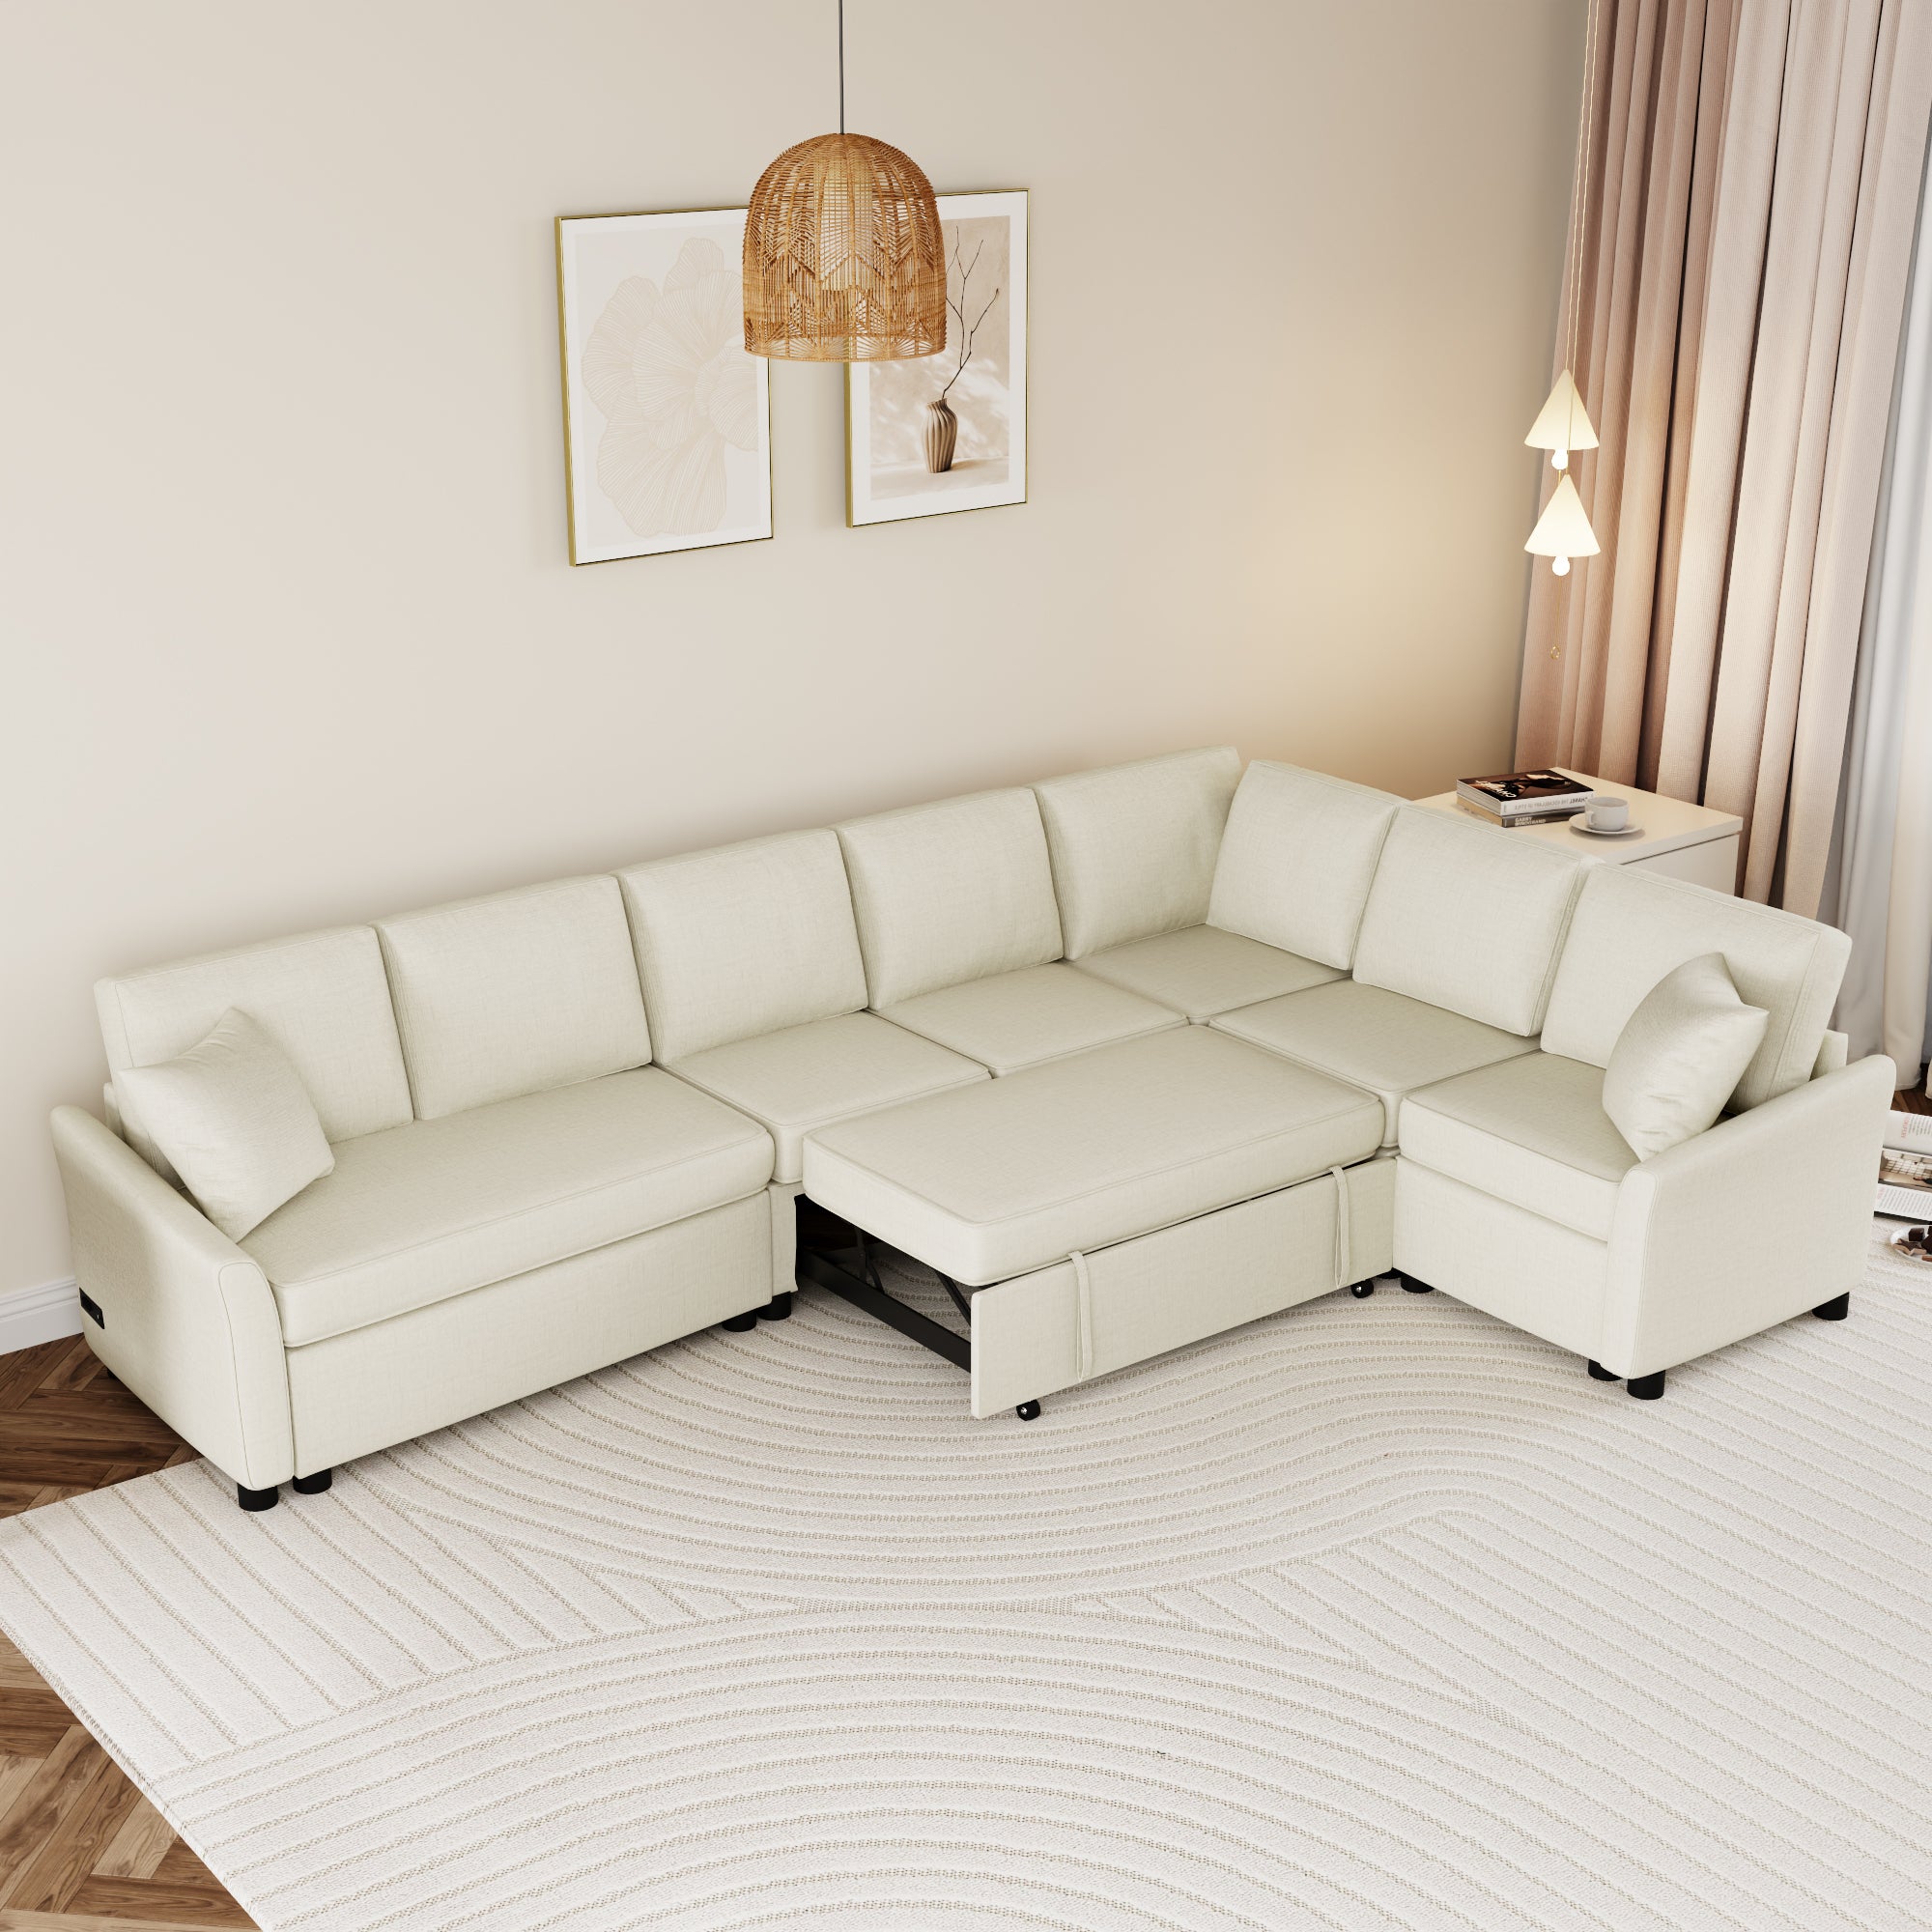 L-Shaped Sofa / Convertible Sofa Bed / Pull Out Sofa Sleeper